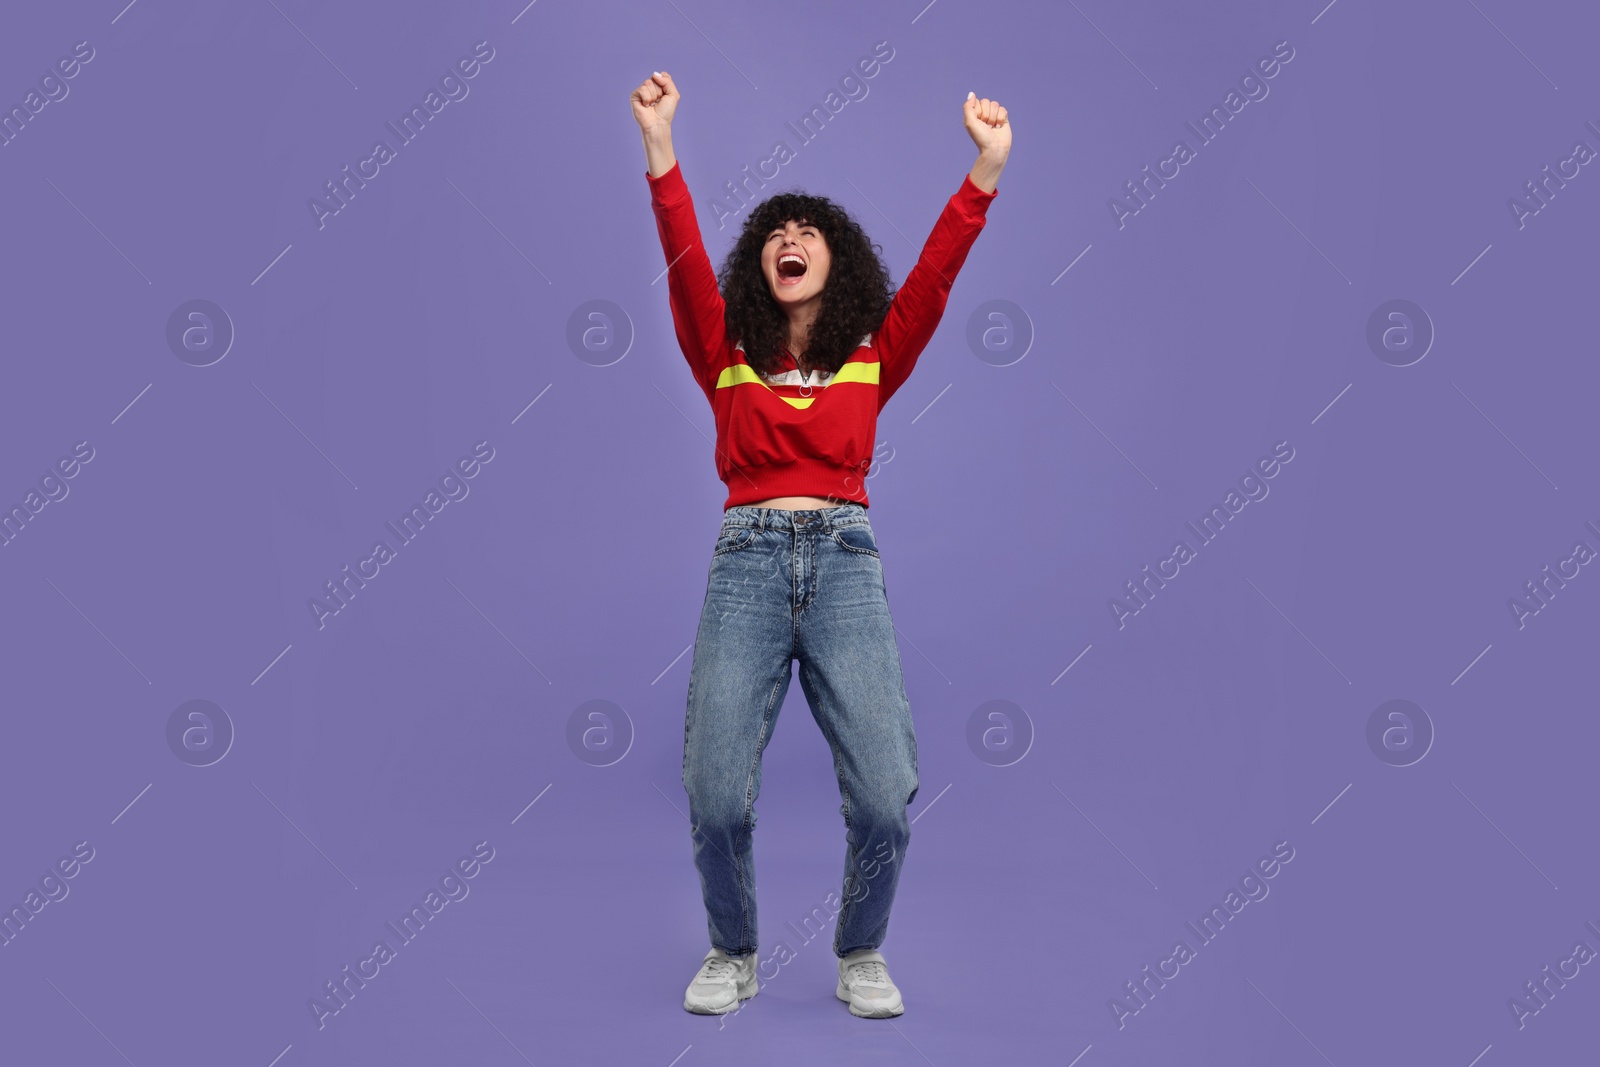 Photo of Happy sports fan celebrating on violet background